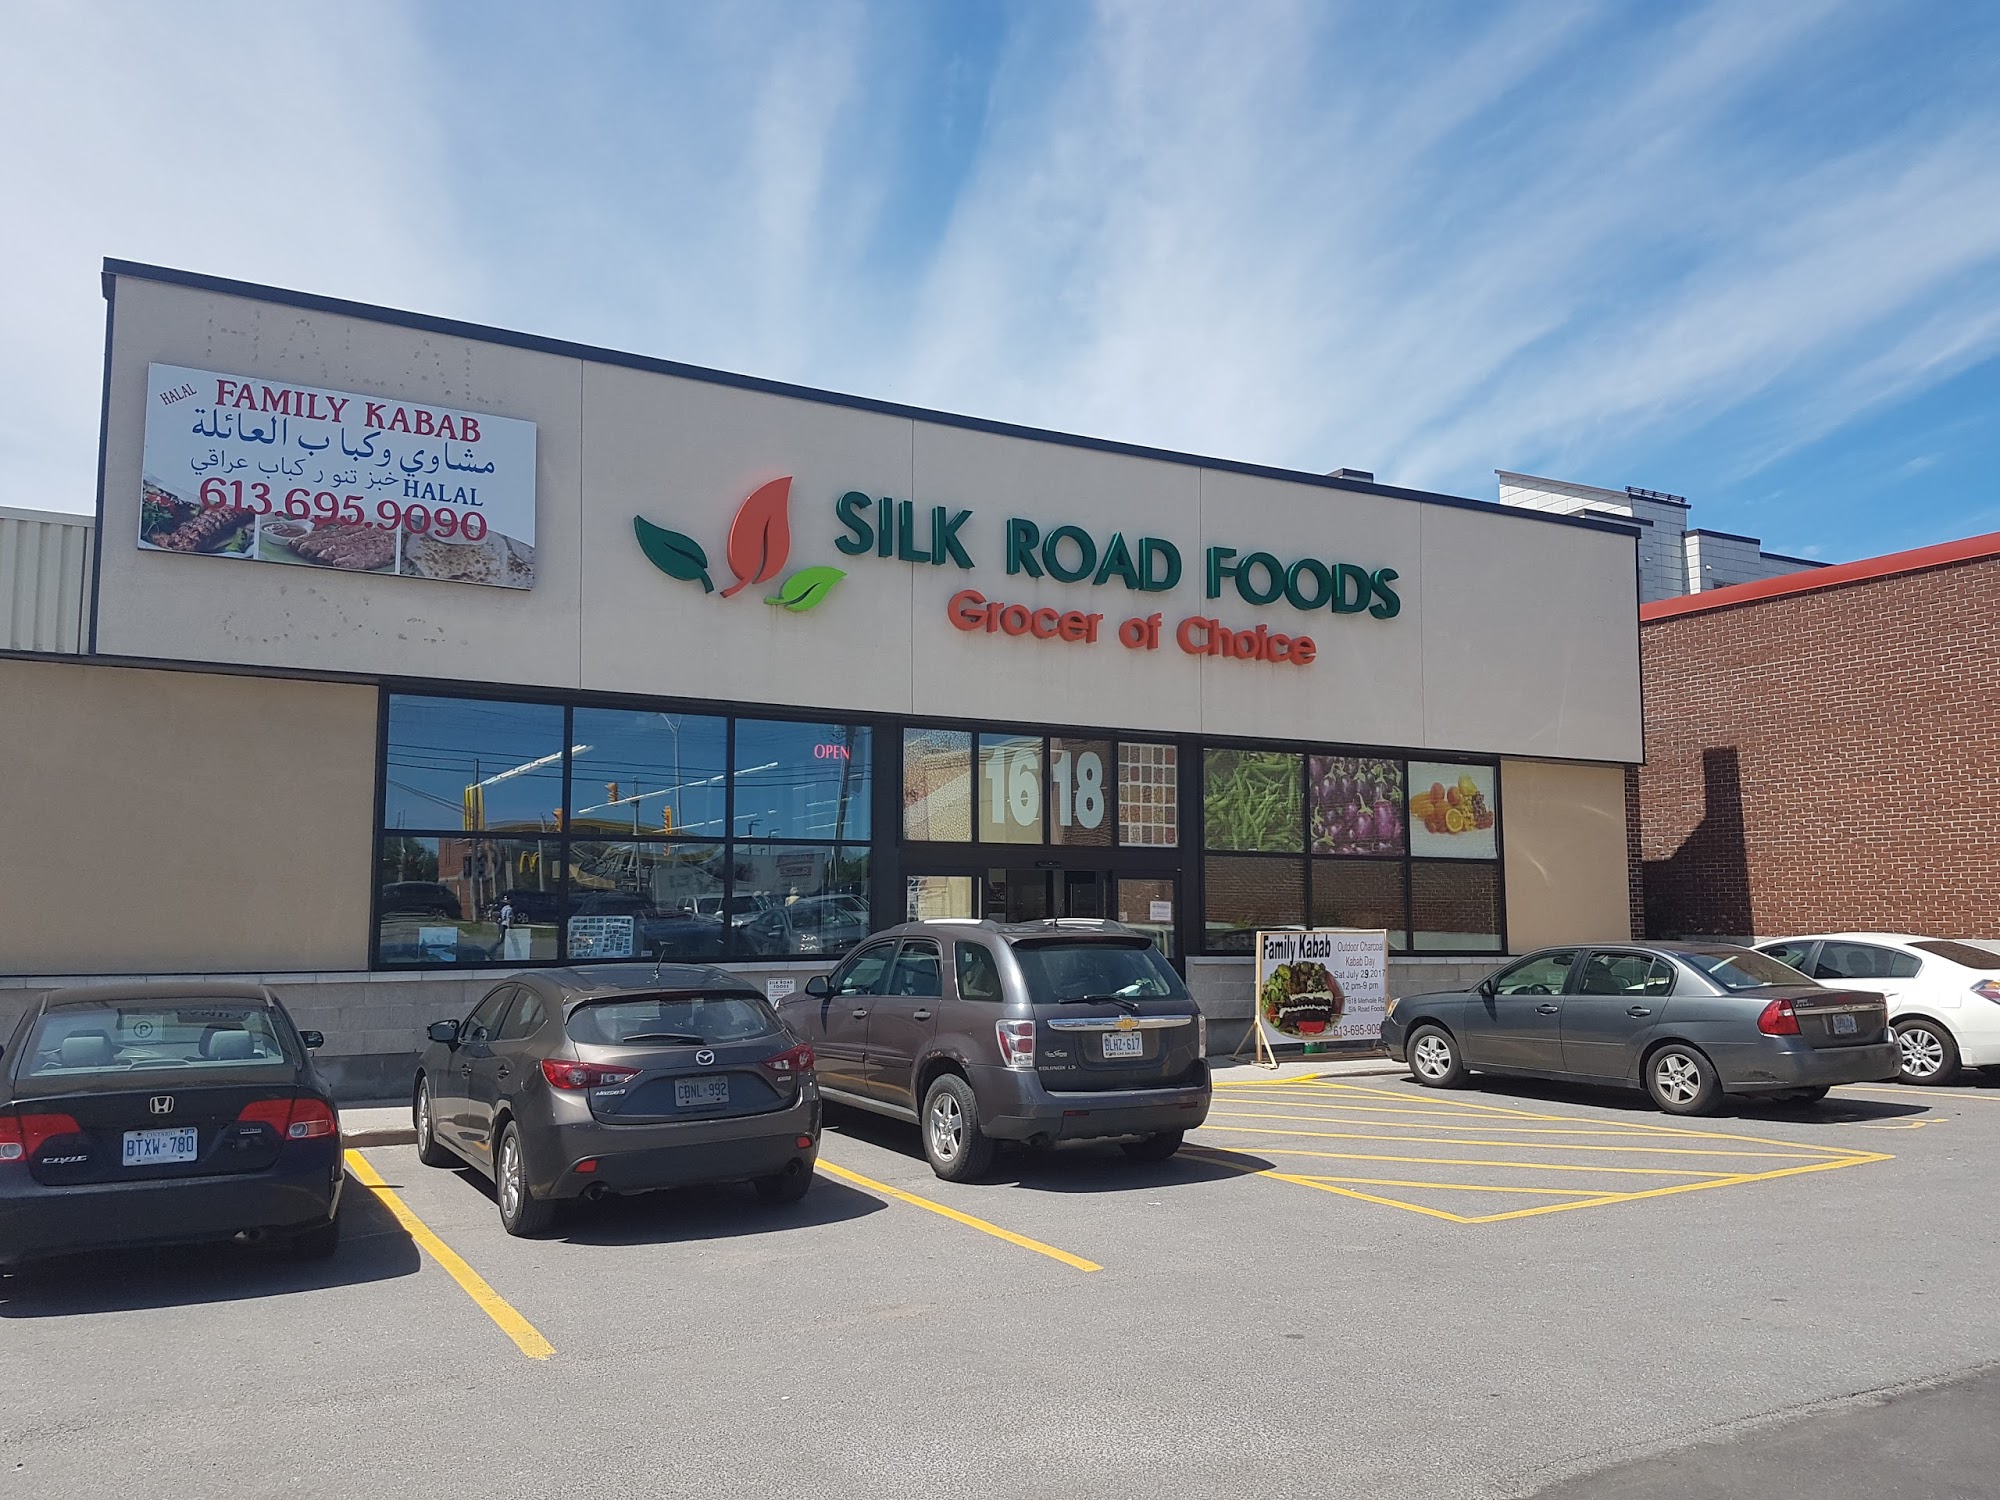 Silk Road Foods Inc.